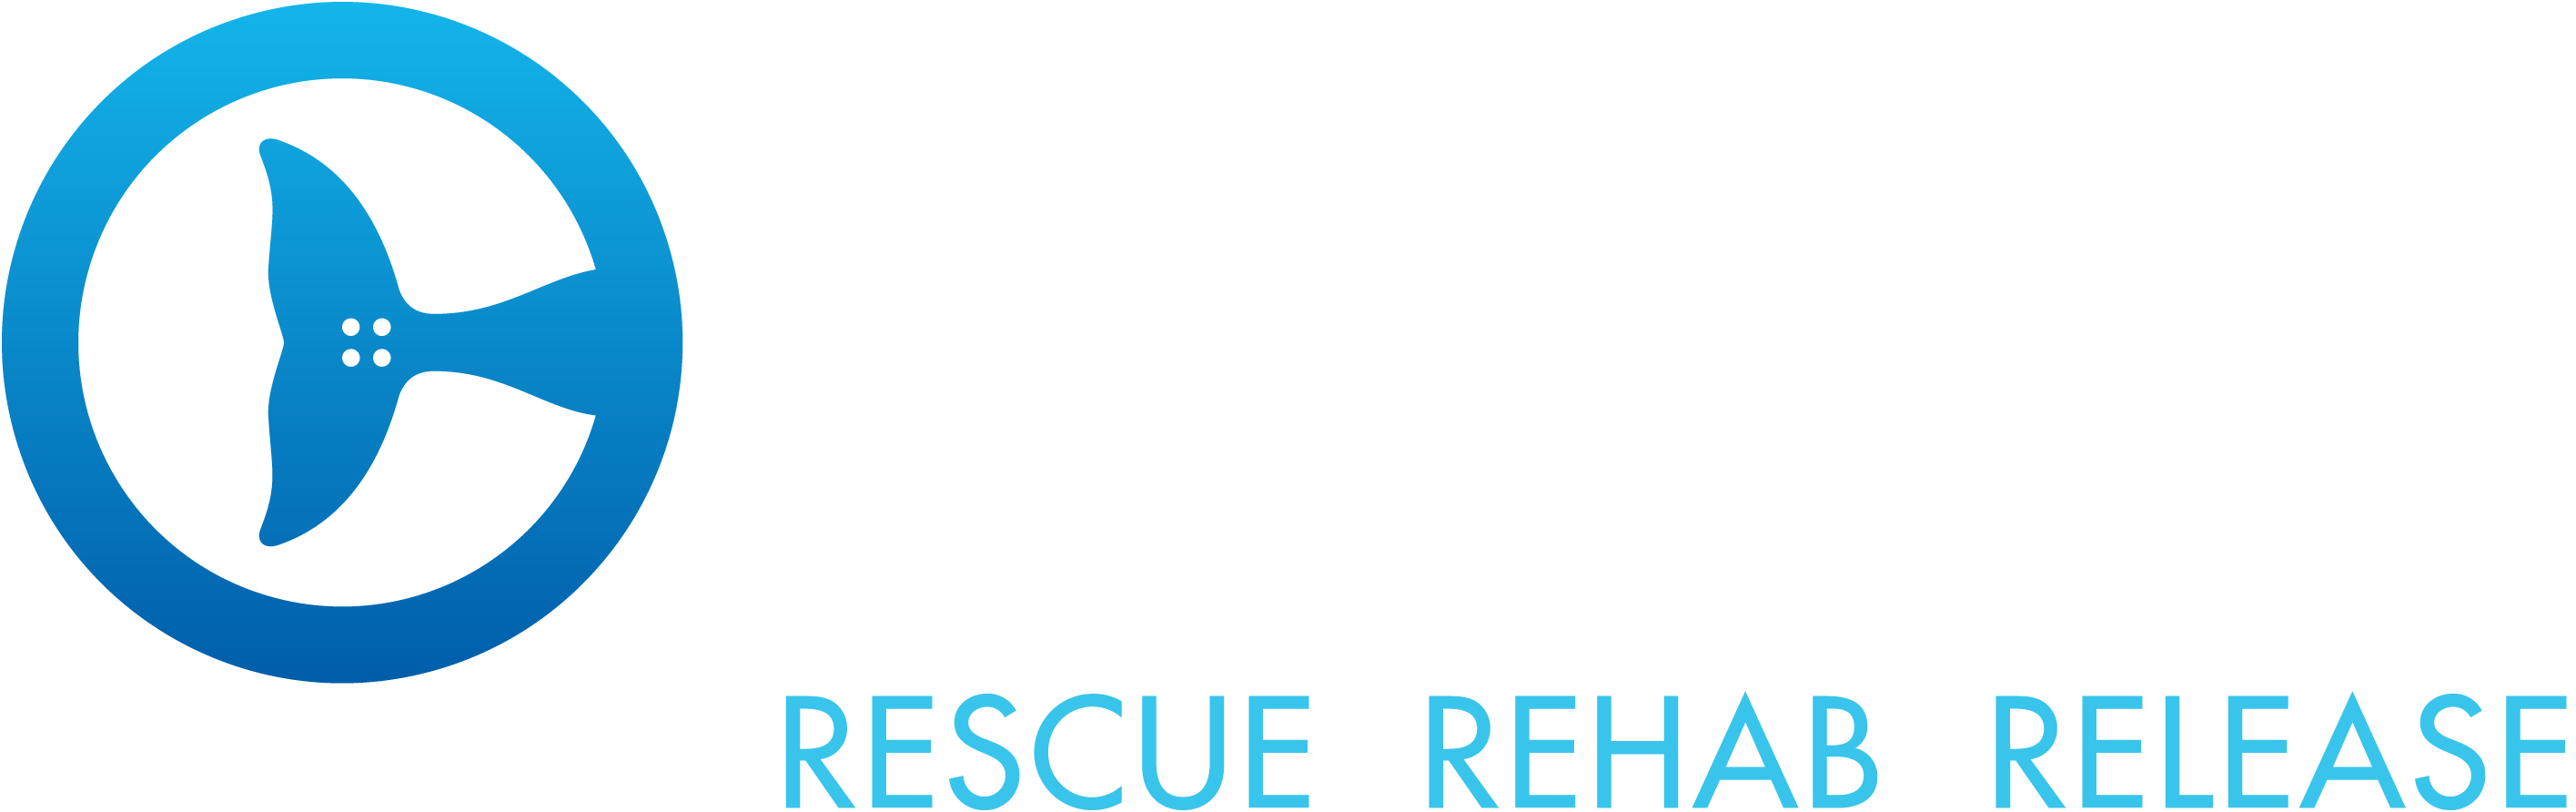 clear water marine aquarium